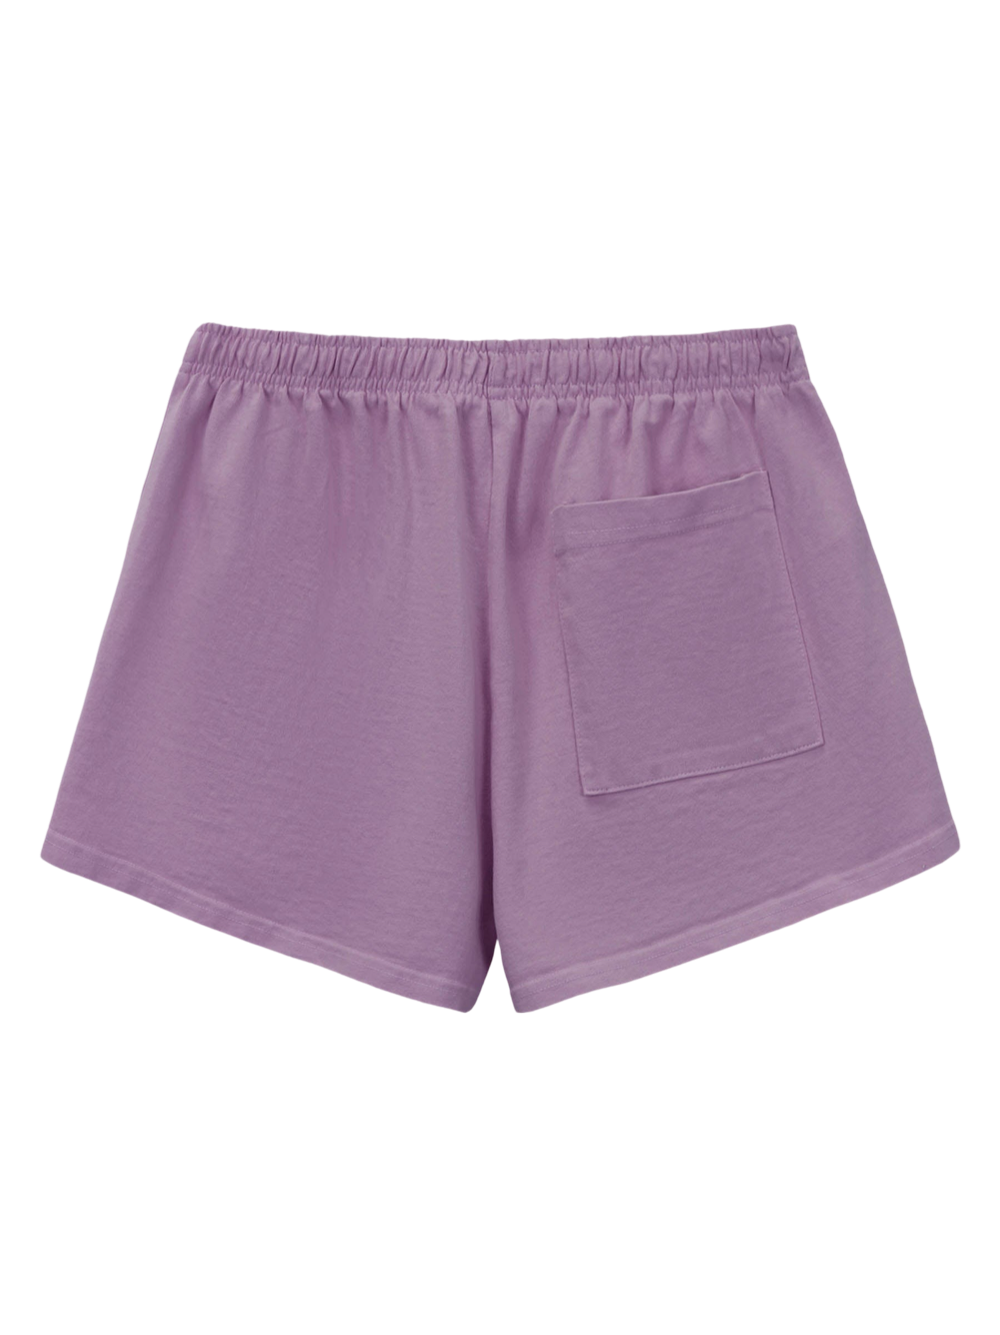 Sporty & Rich Health Initiative Disco Shorts in Soft Lavender 339